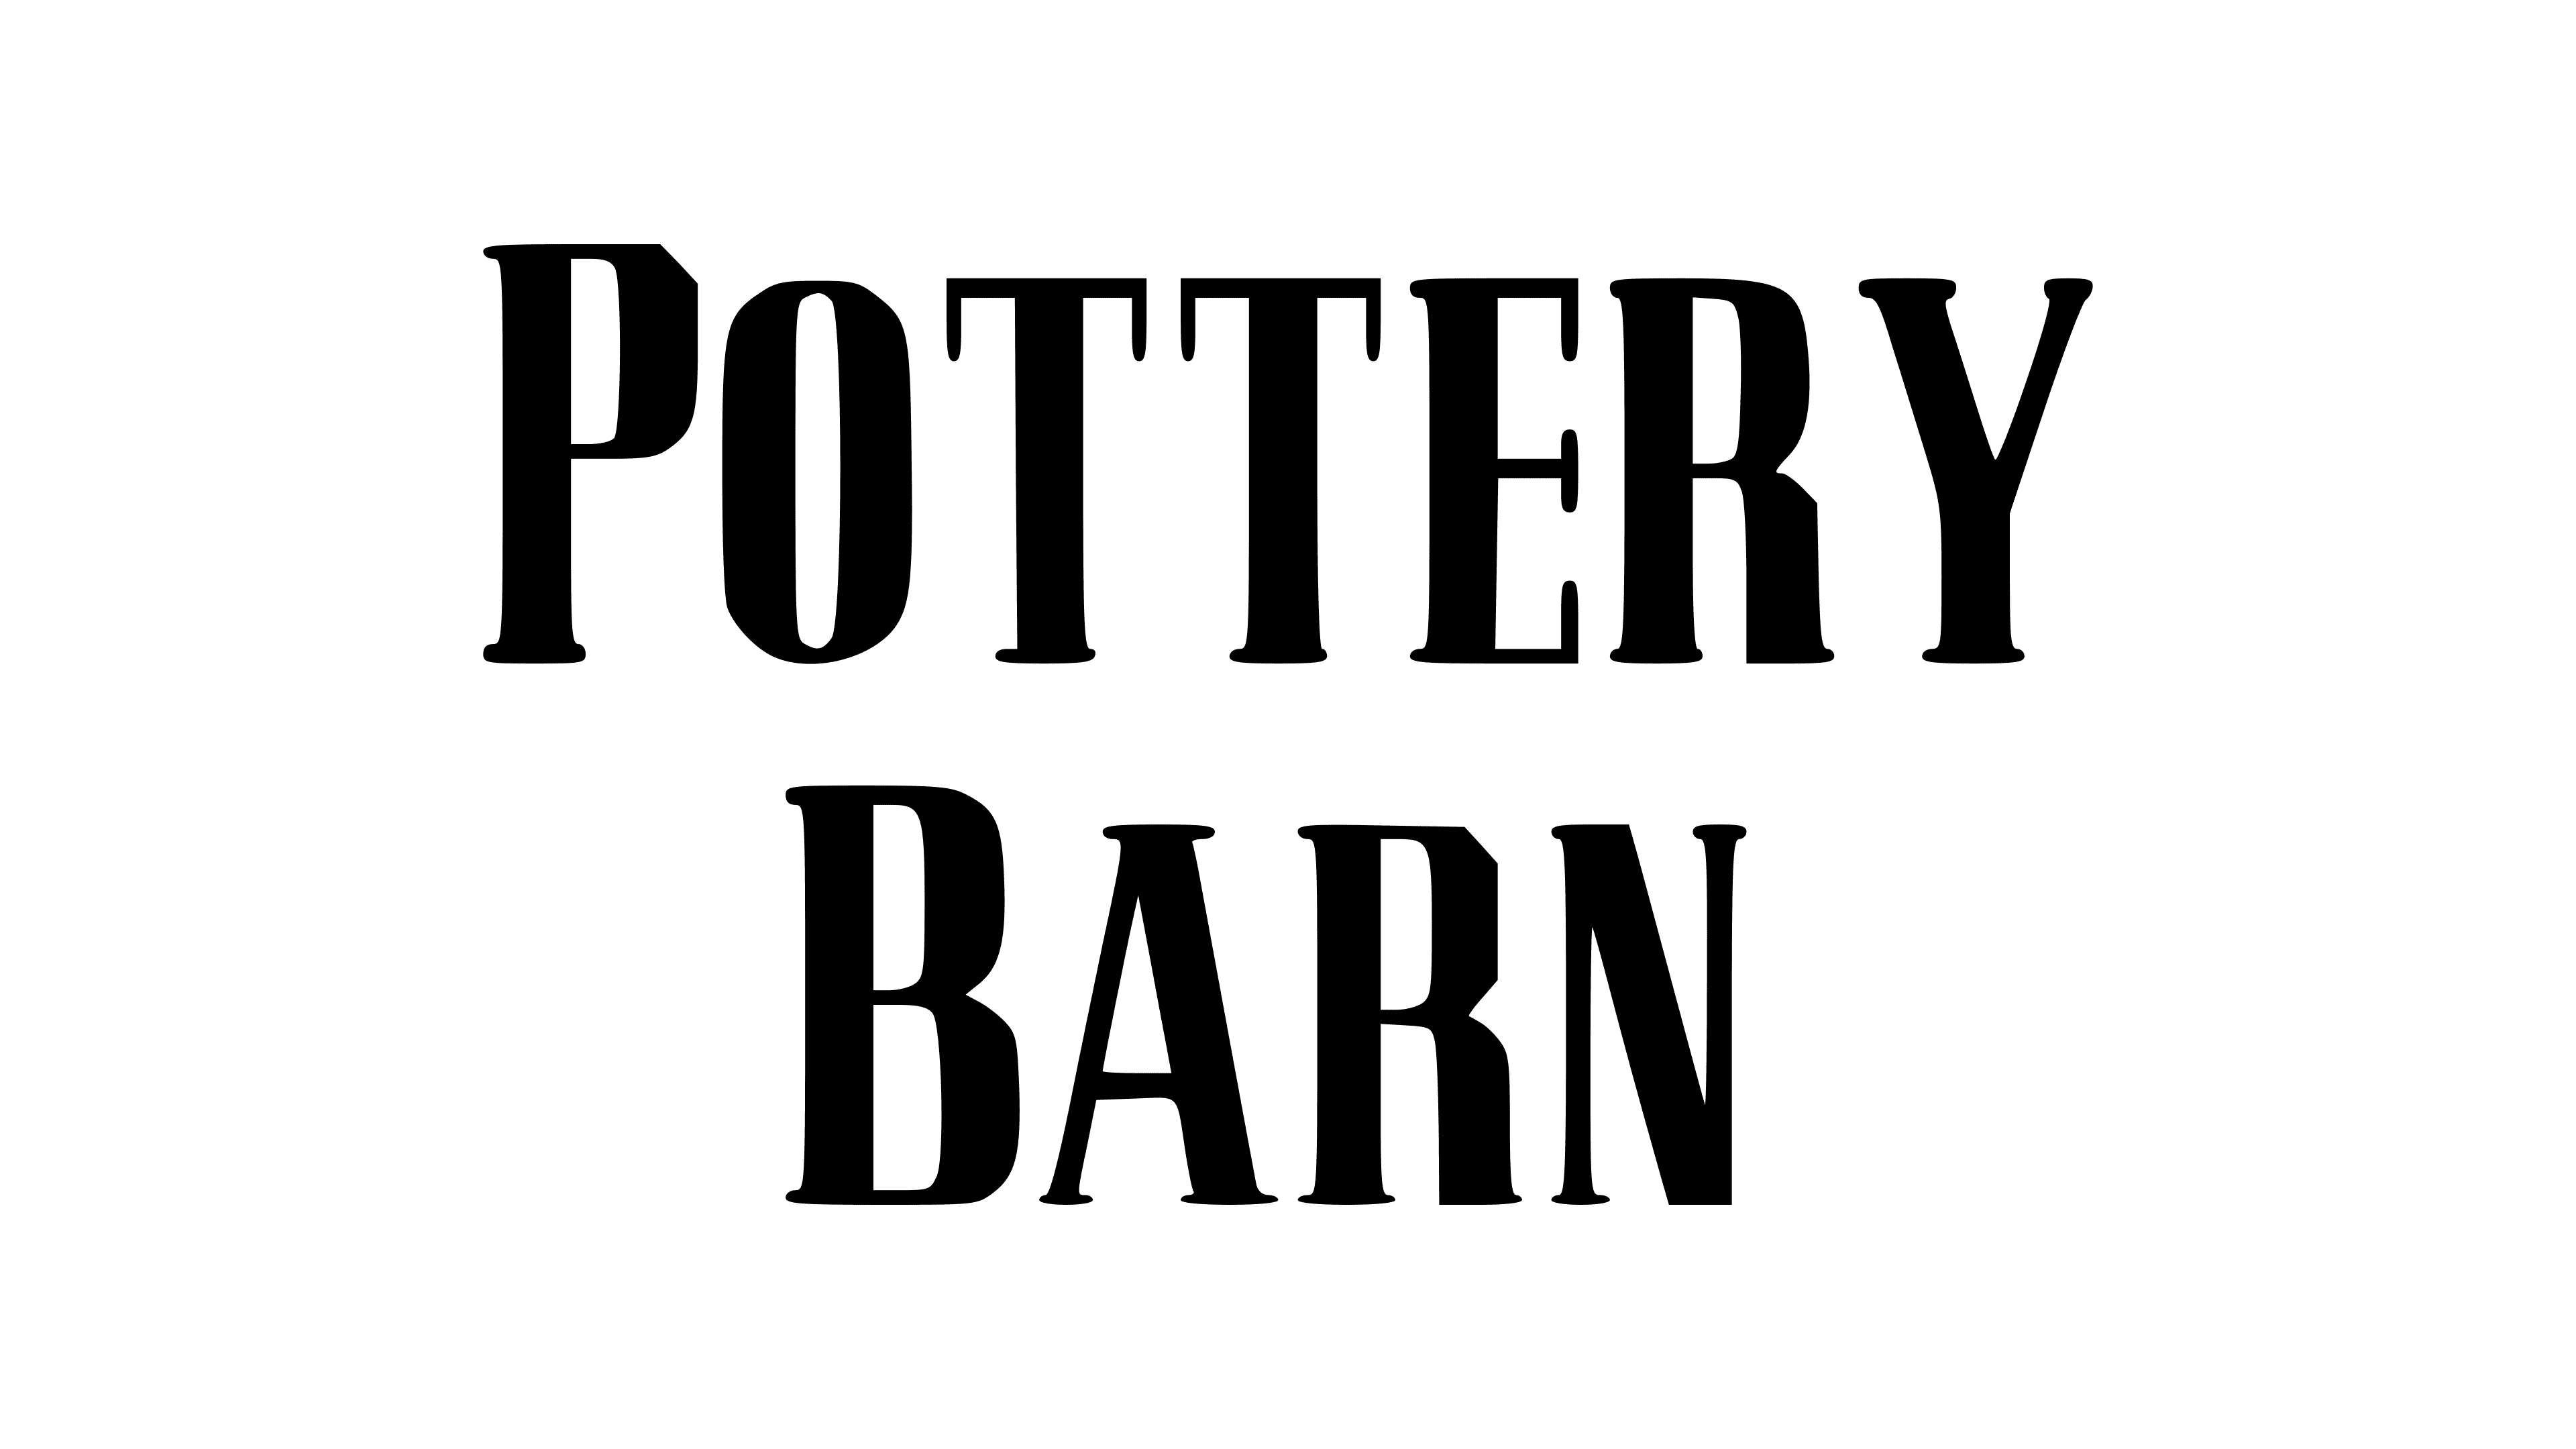 Free pottery - Vector Art